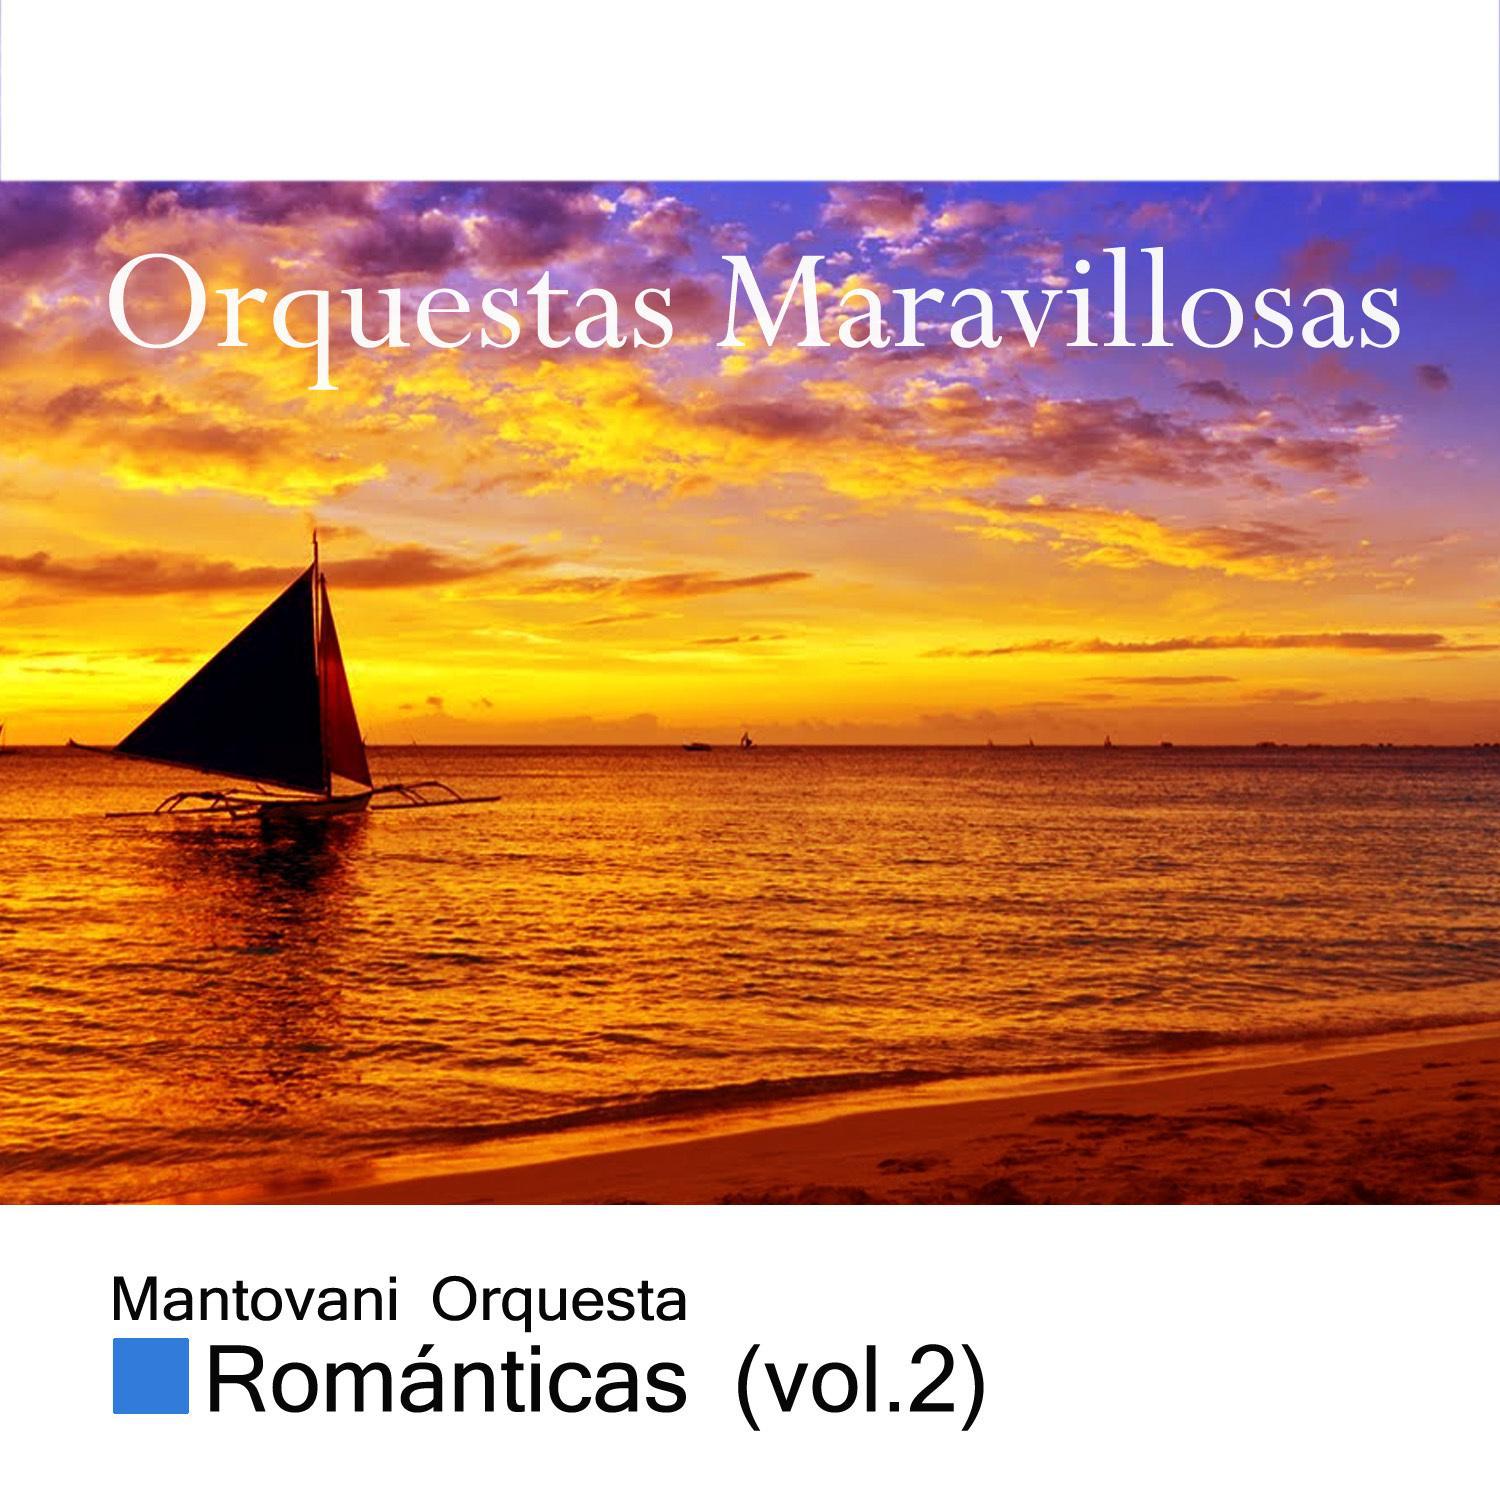 Orquestas Maravillosas, Roma nticas Vol. 2